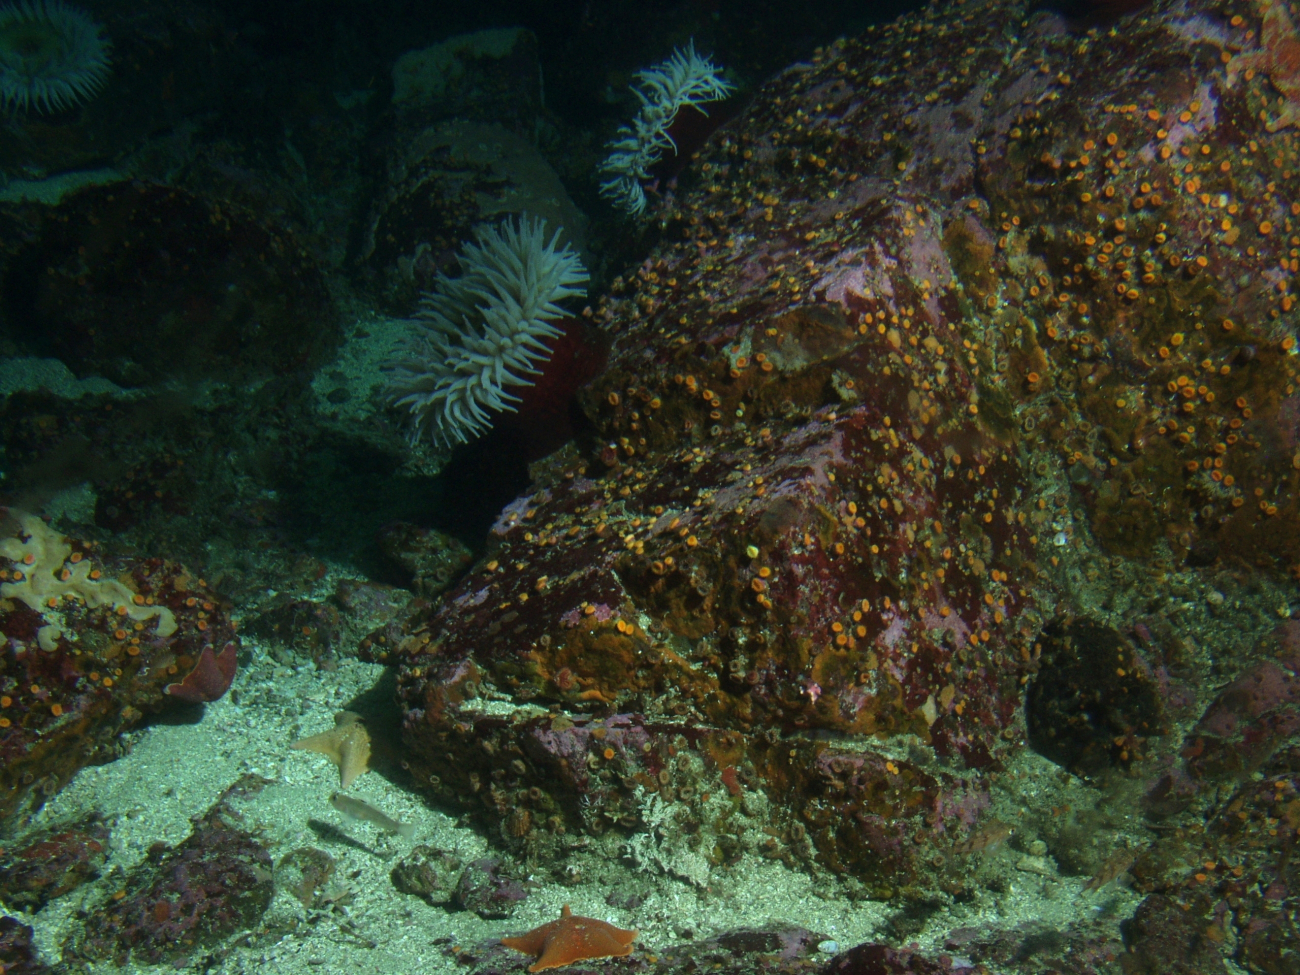 Fish eating sea anemone (Urticina piscivora) on boulder in rocky habitat